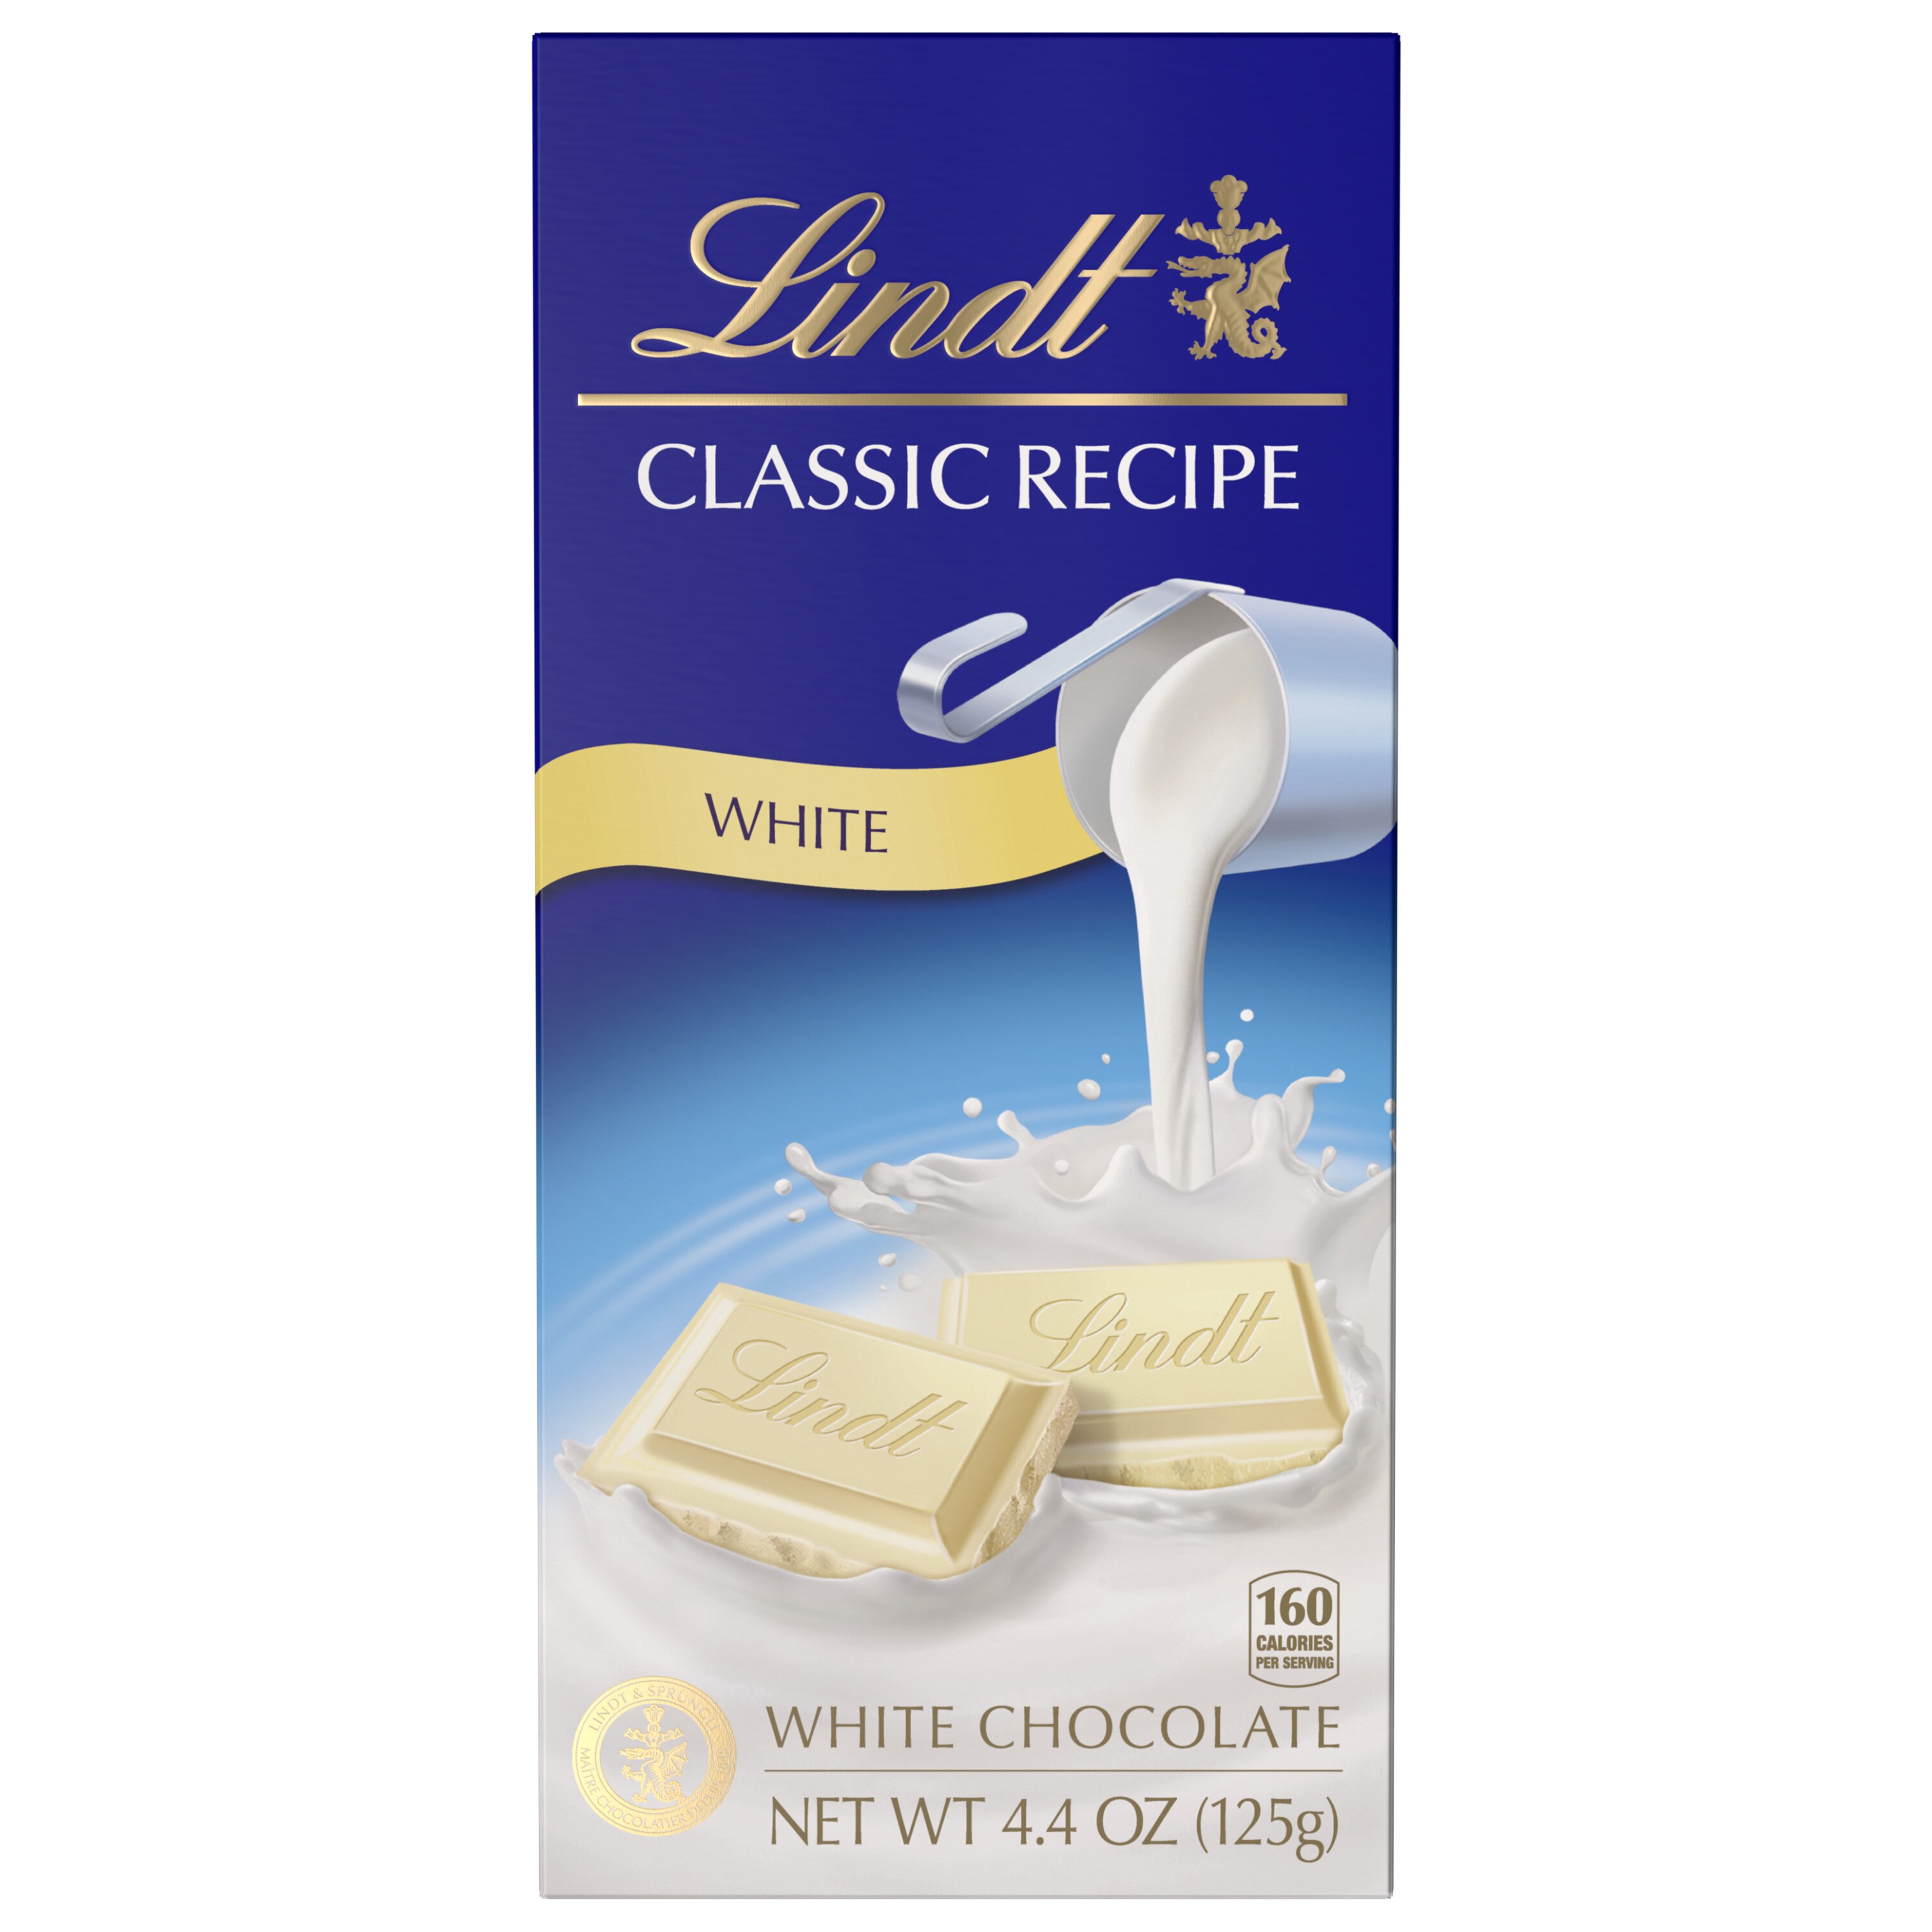 Lindt Classic Recipe White Chocolate Candy Bar, 4.4 Oz